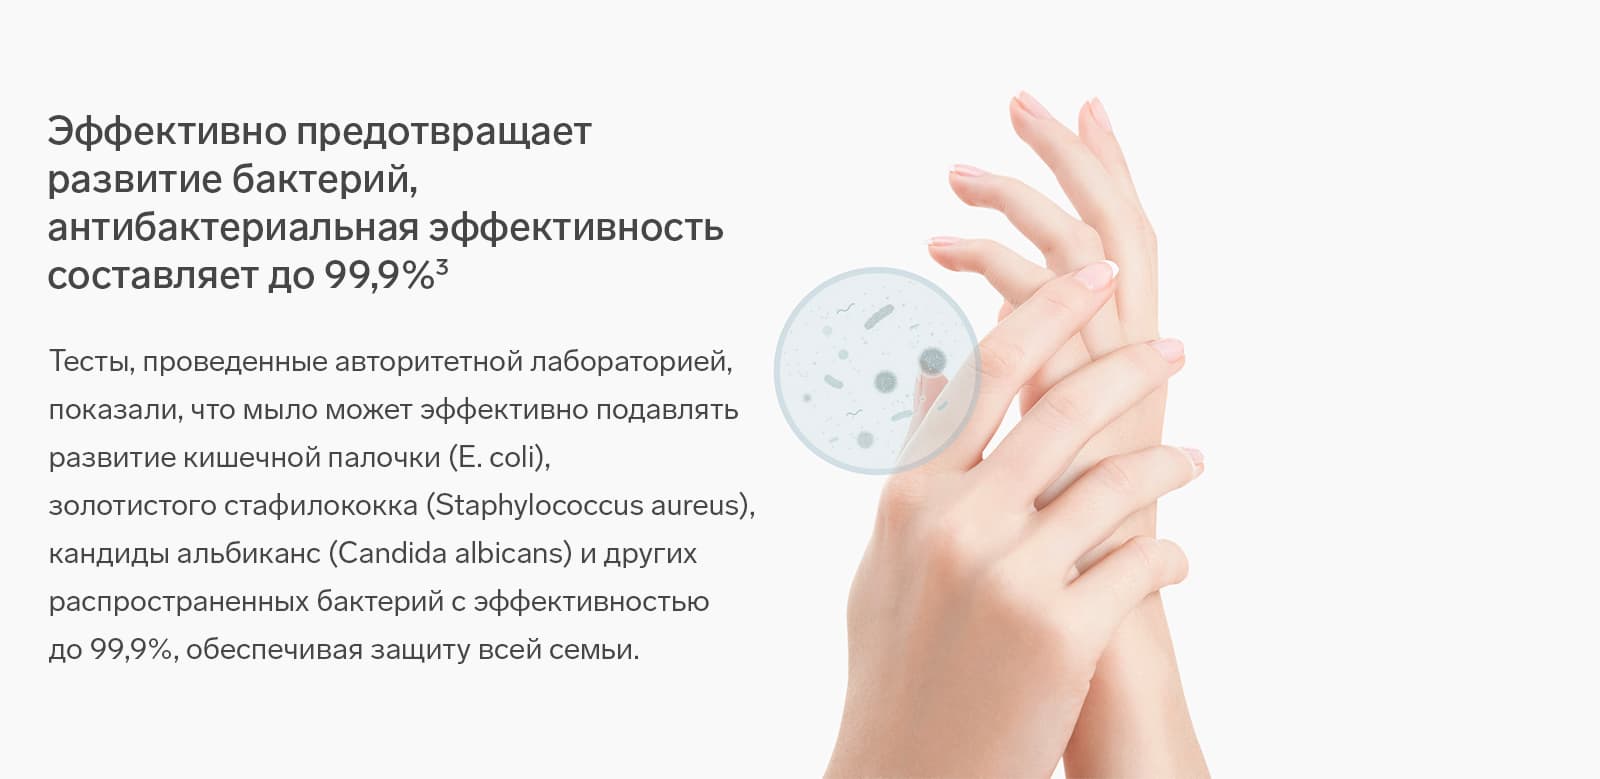 Mi Automatic Soap Dispenser предотвращает развитие бактерий